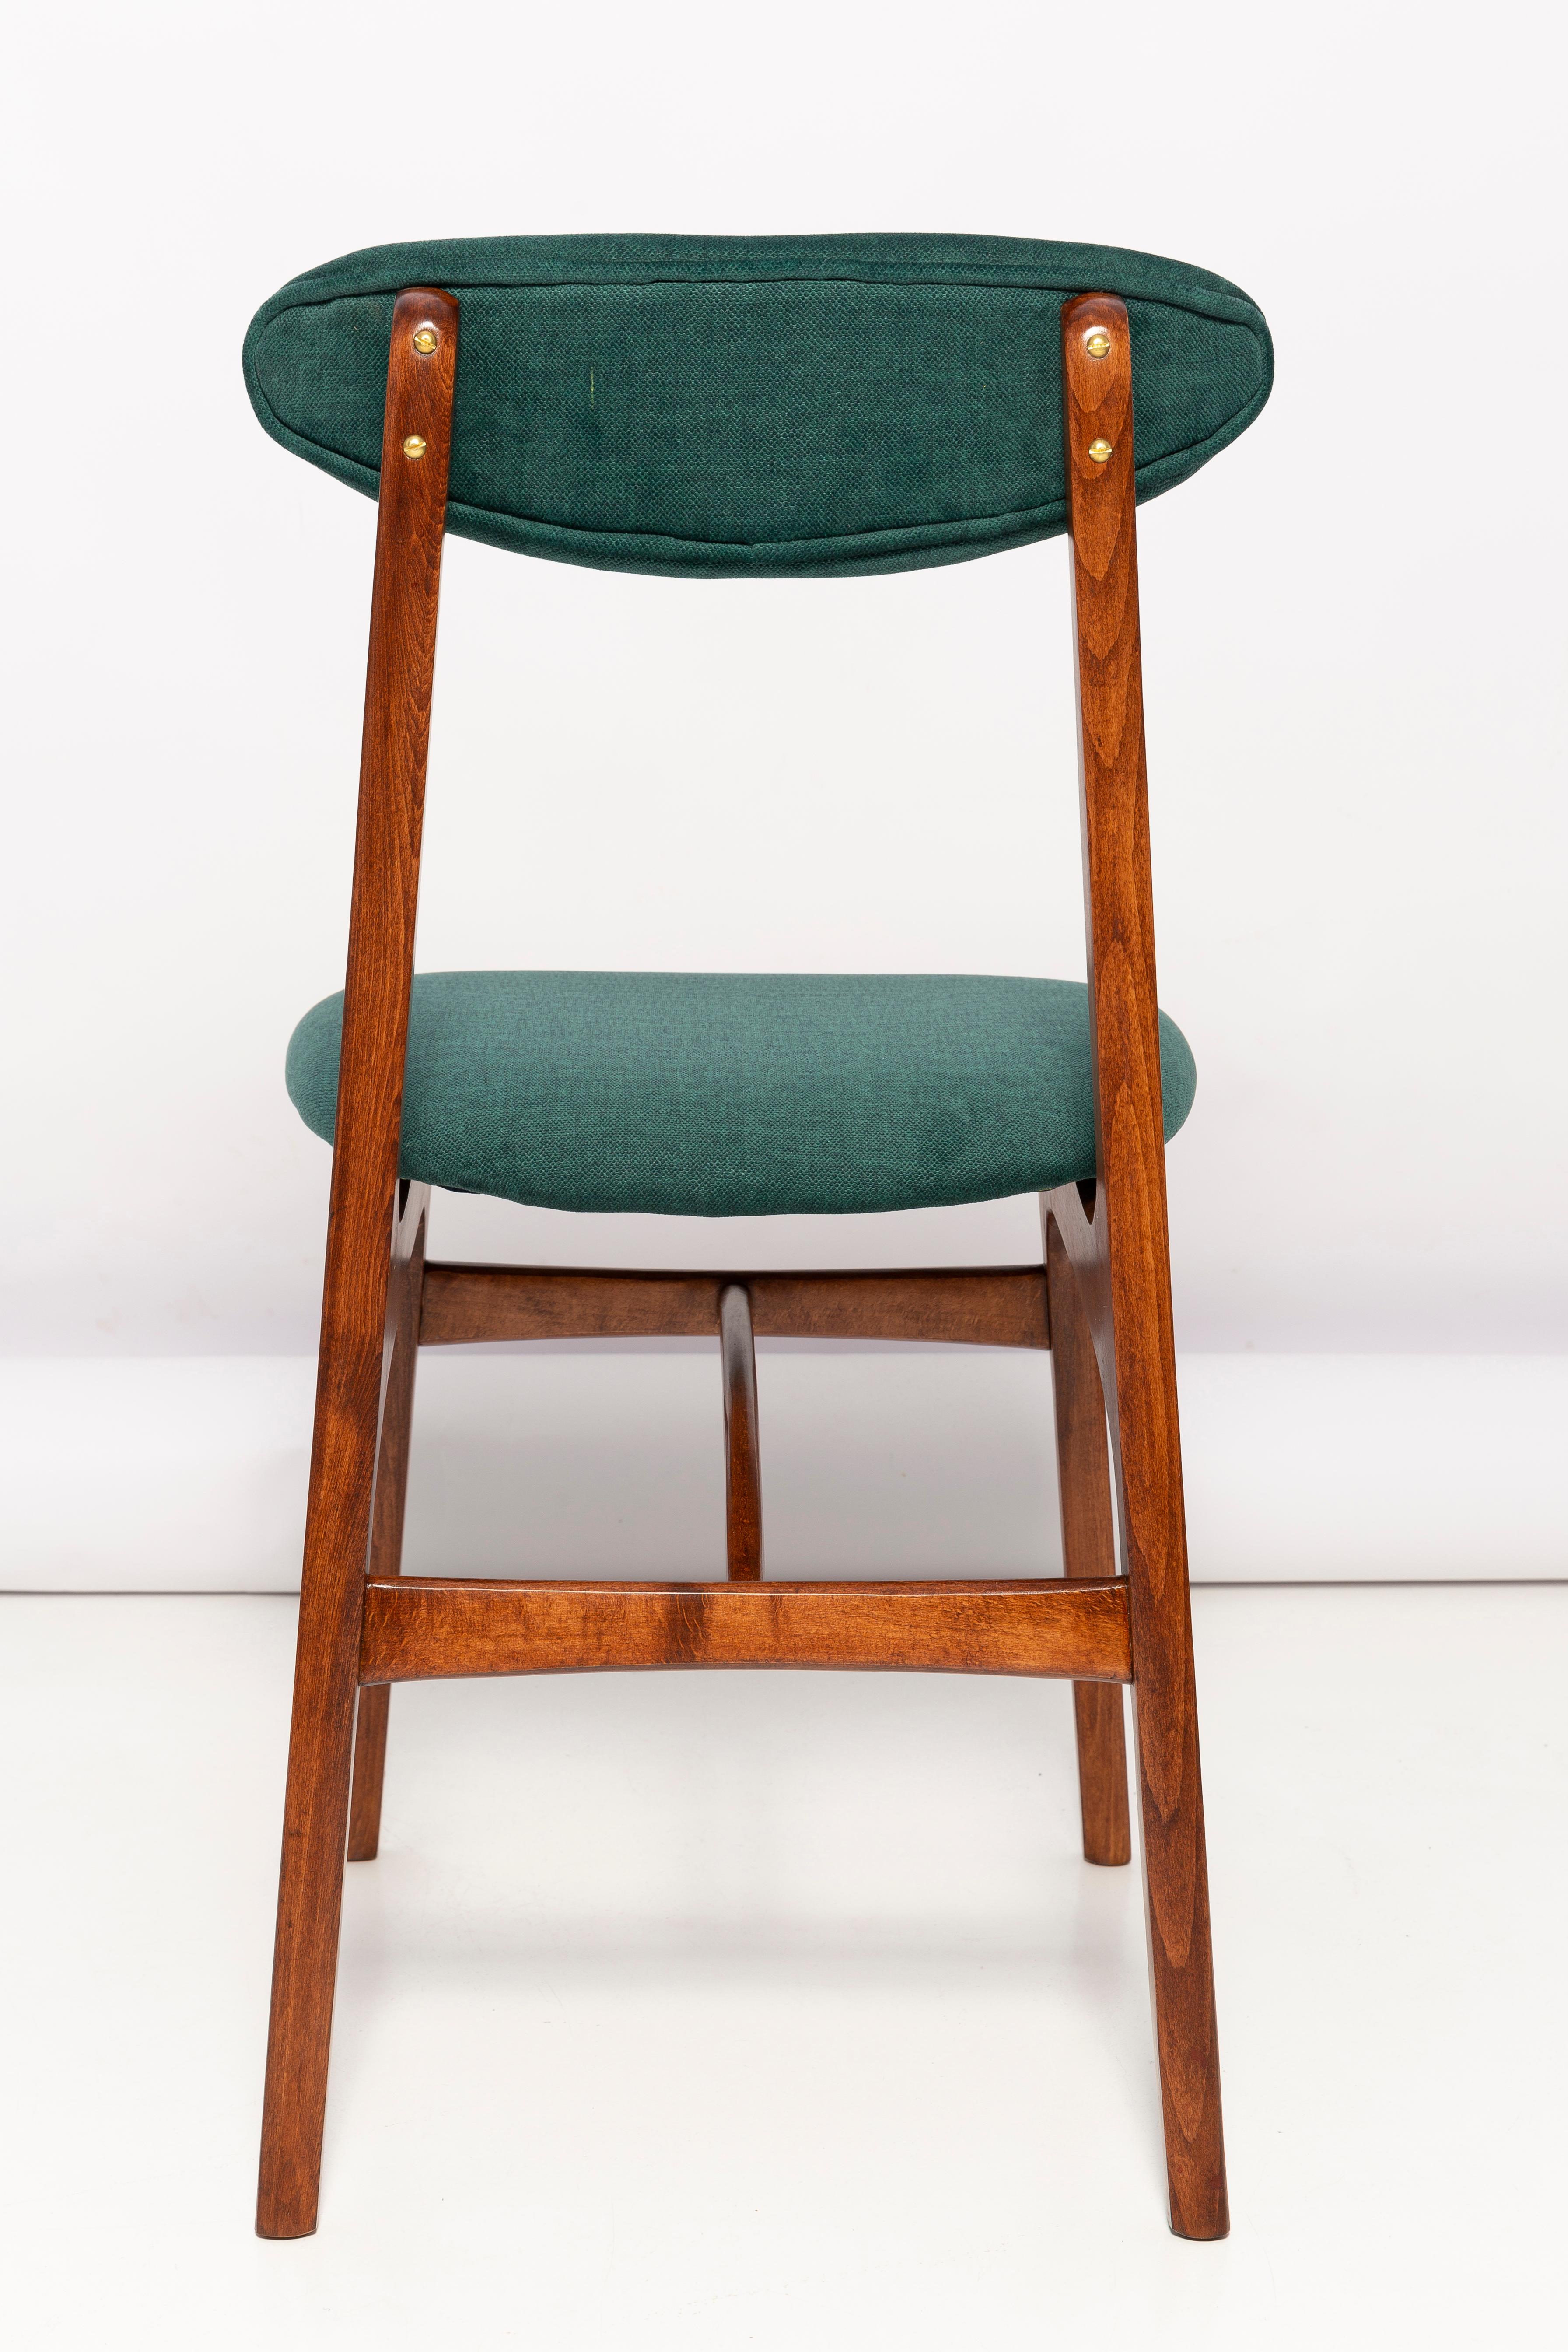 Mid Century Green Velvet Chair Designed by Rajmund Halas, Poland, 1960s For Sale 2